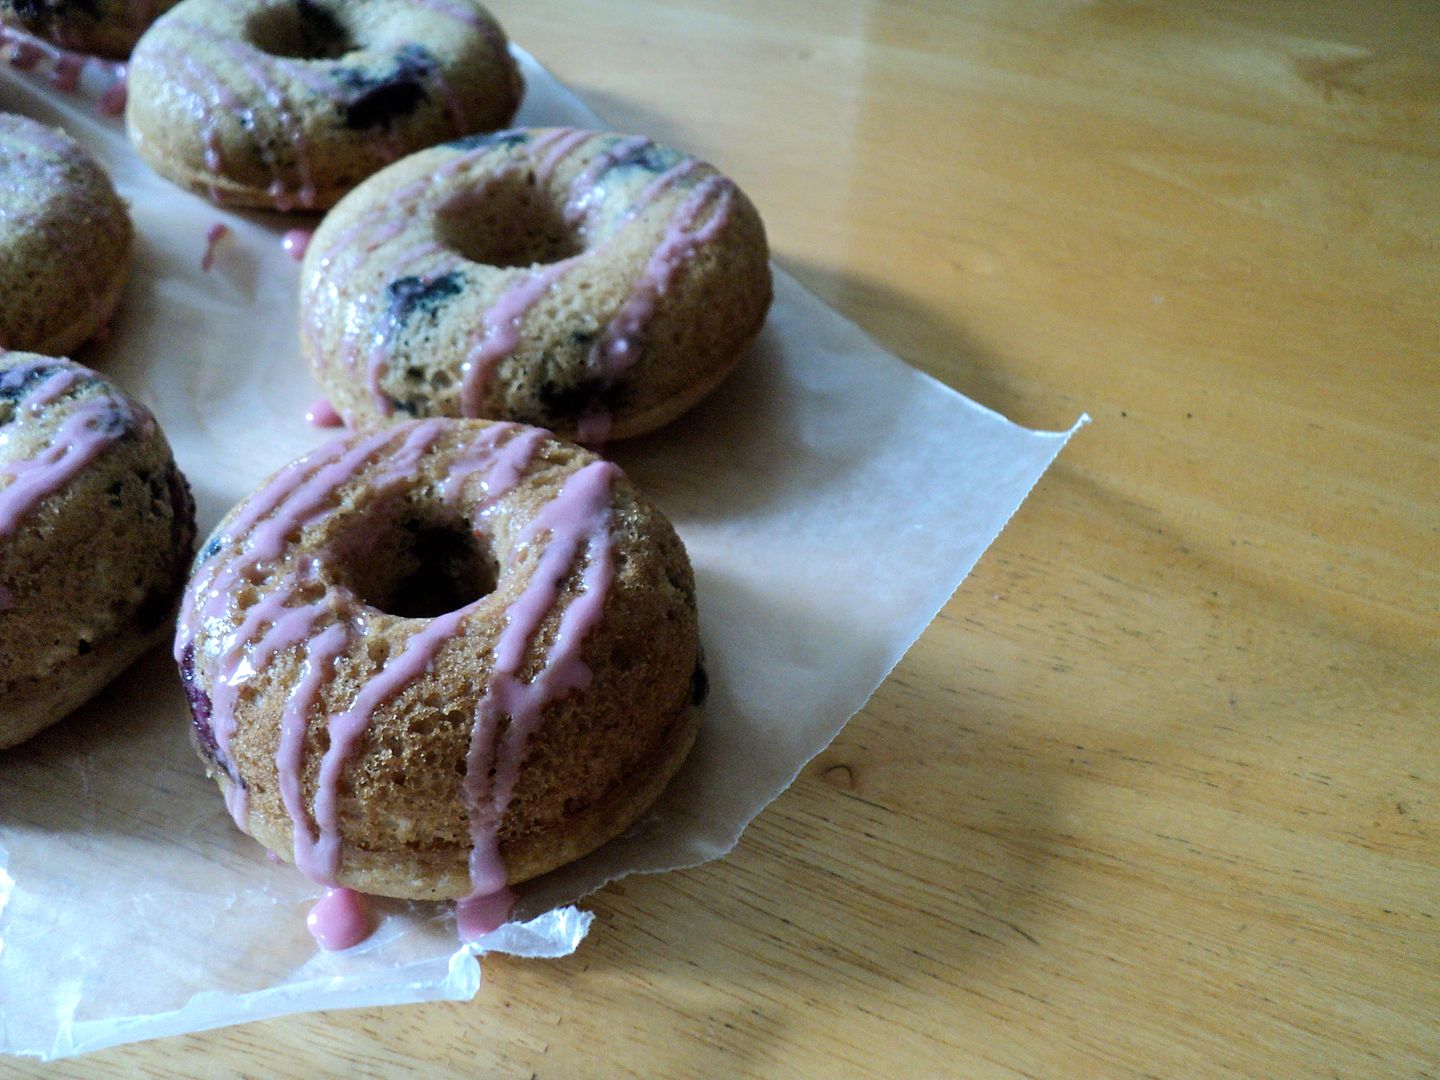 leaves and flours vegan baked blueberry cake donut